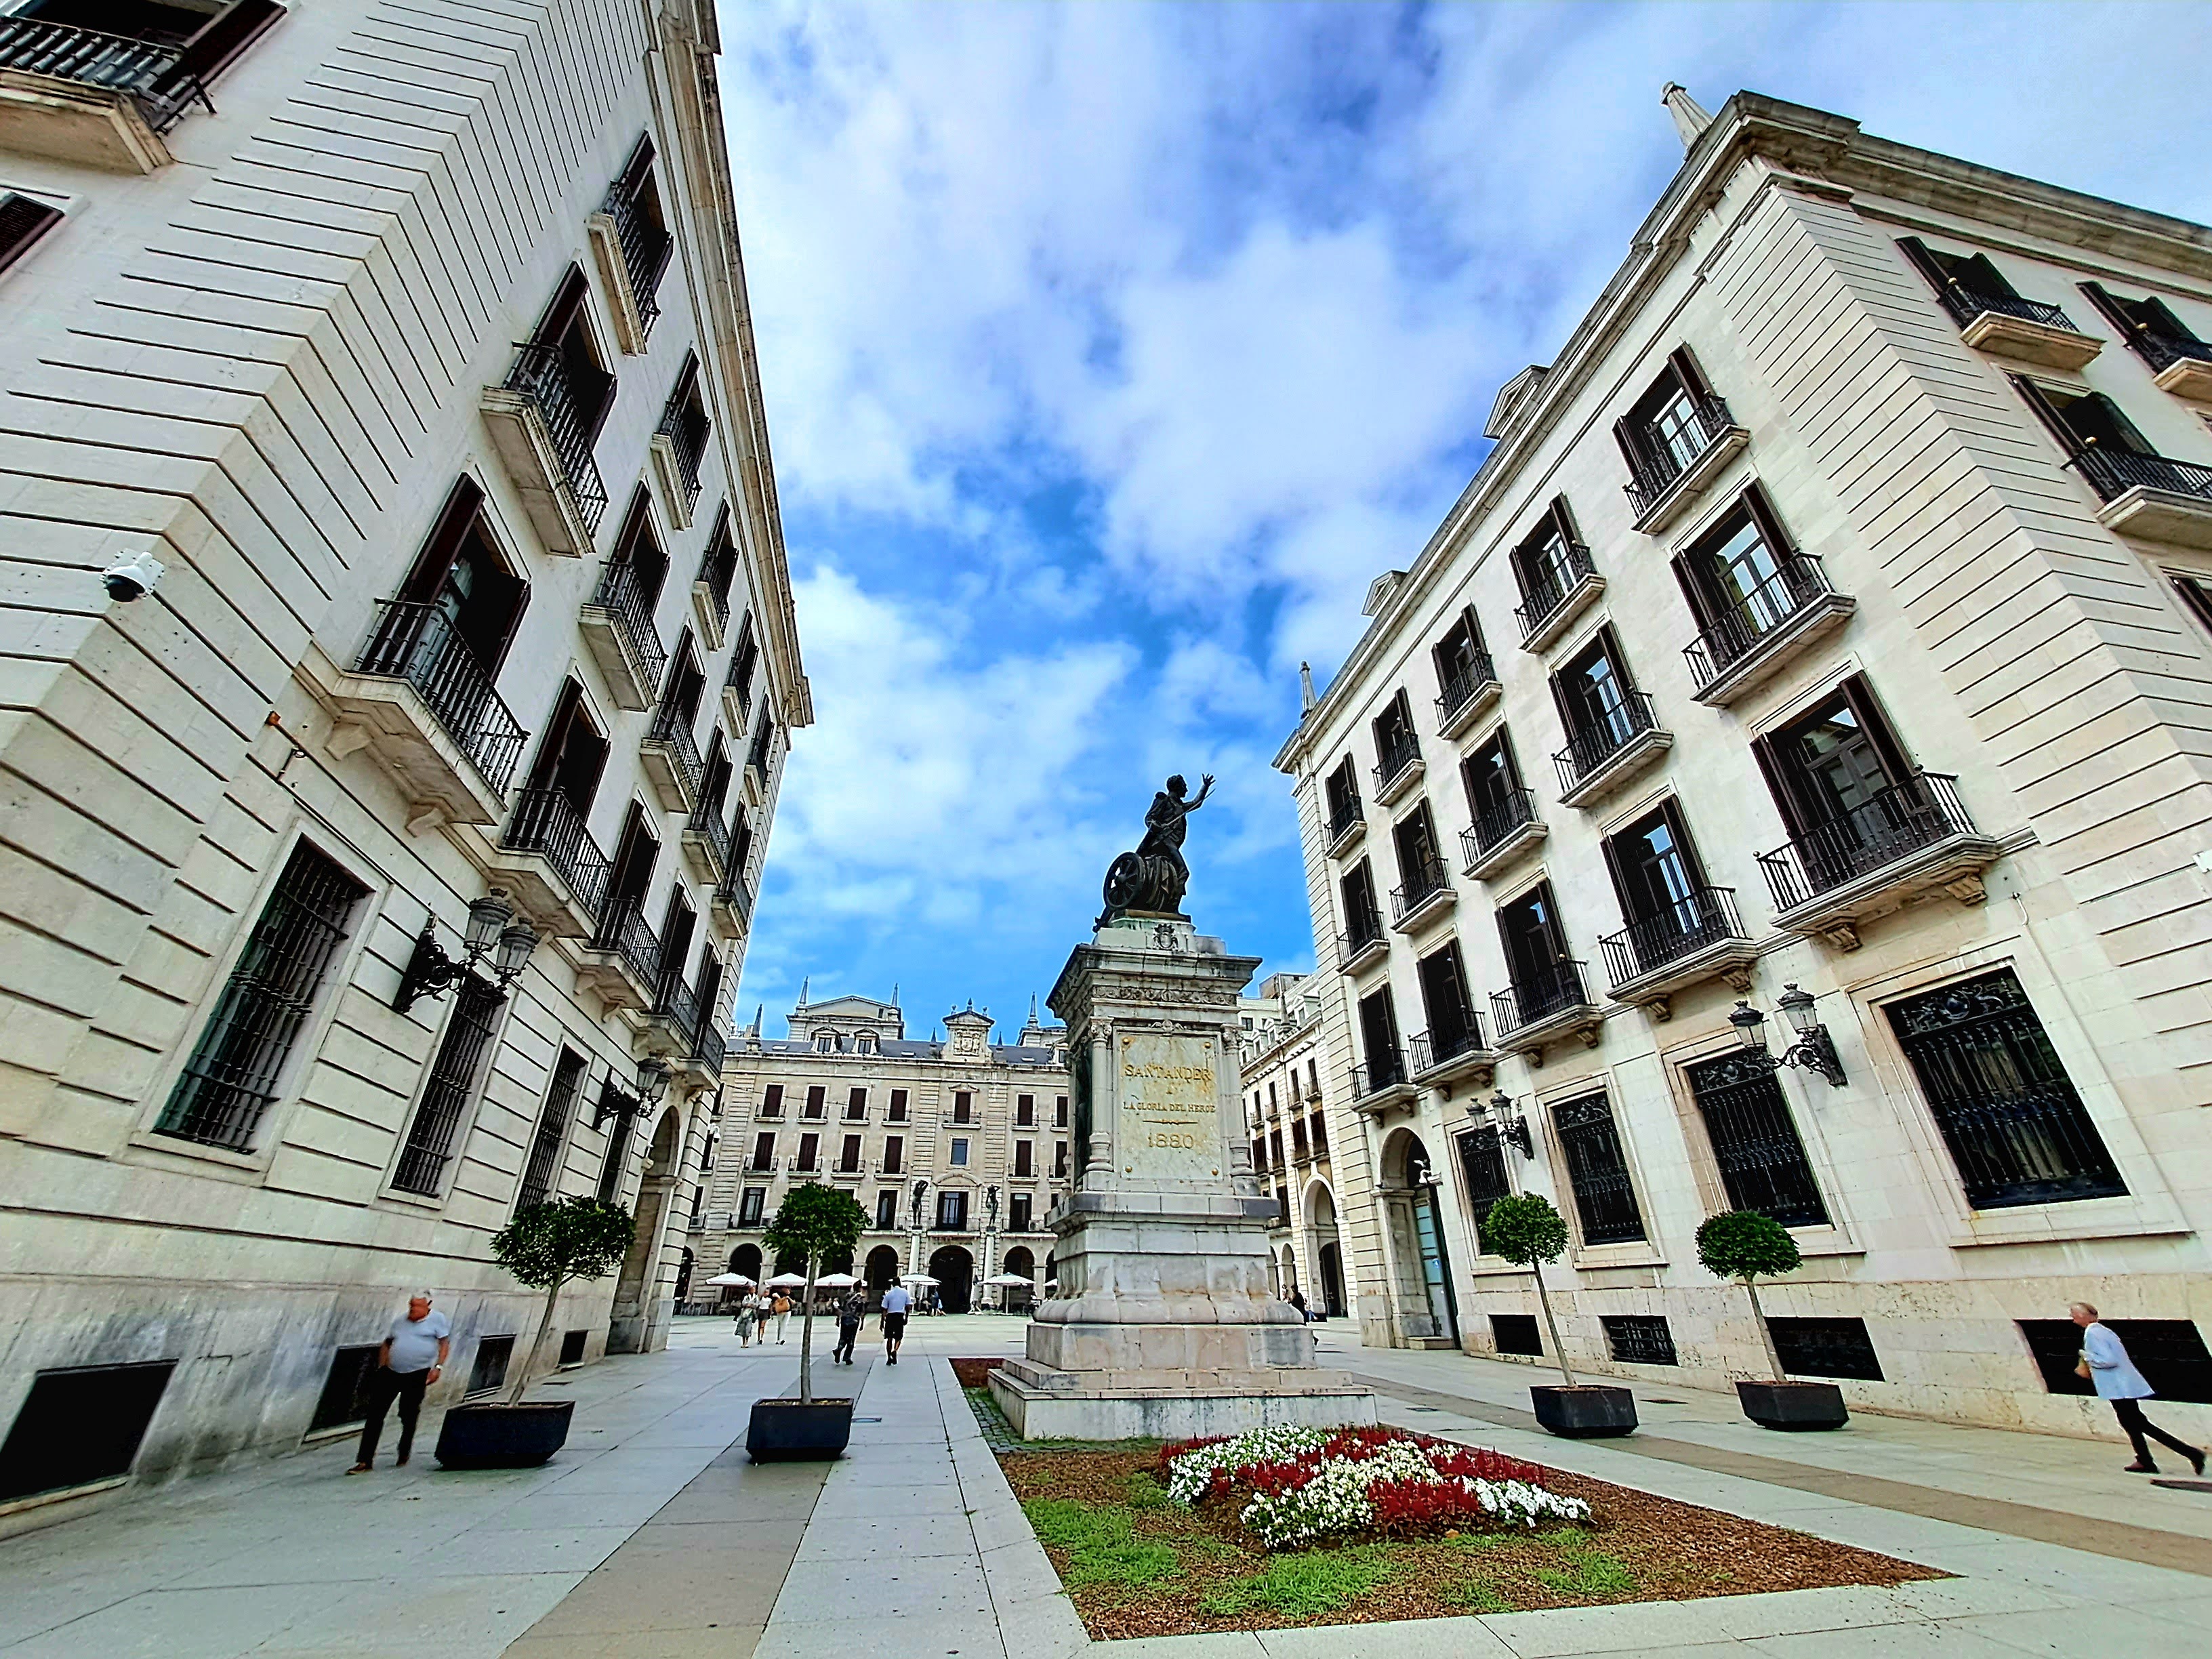 Santander central plaza